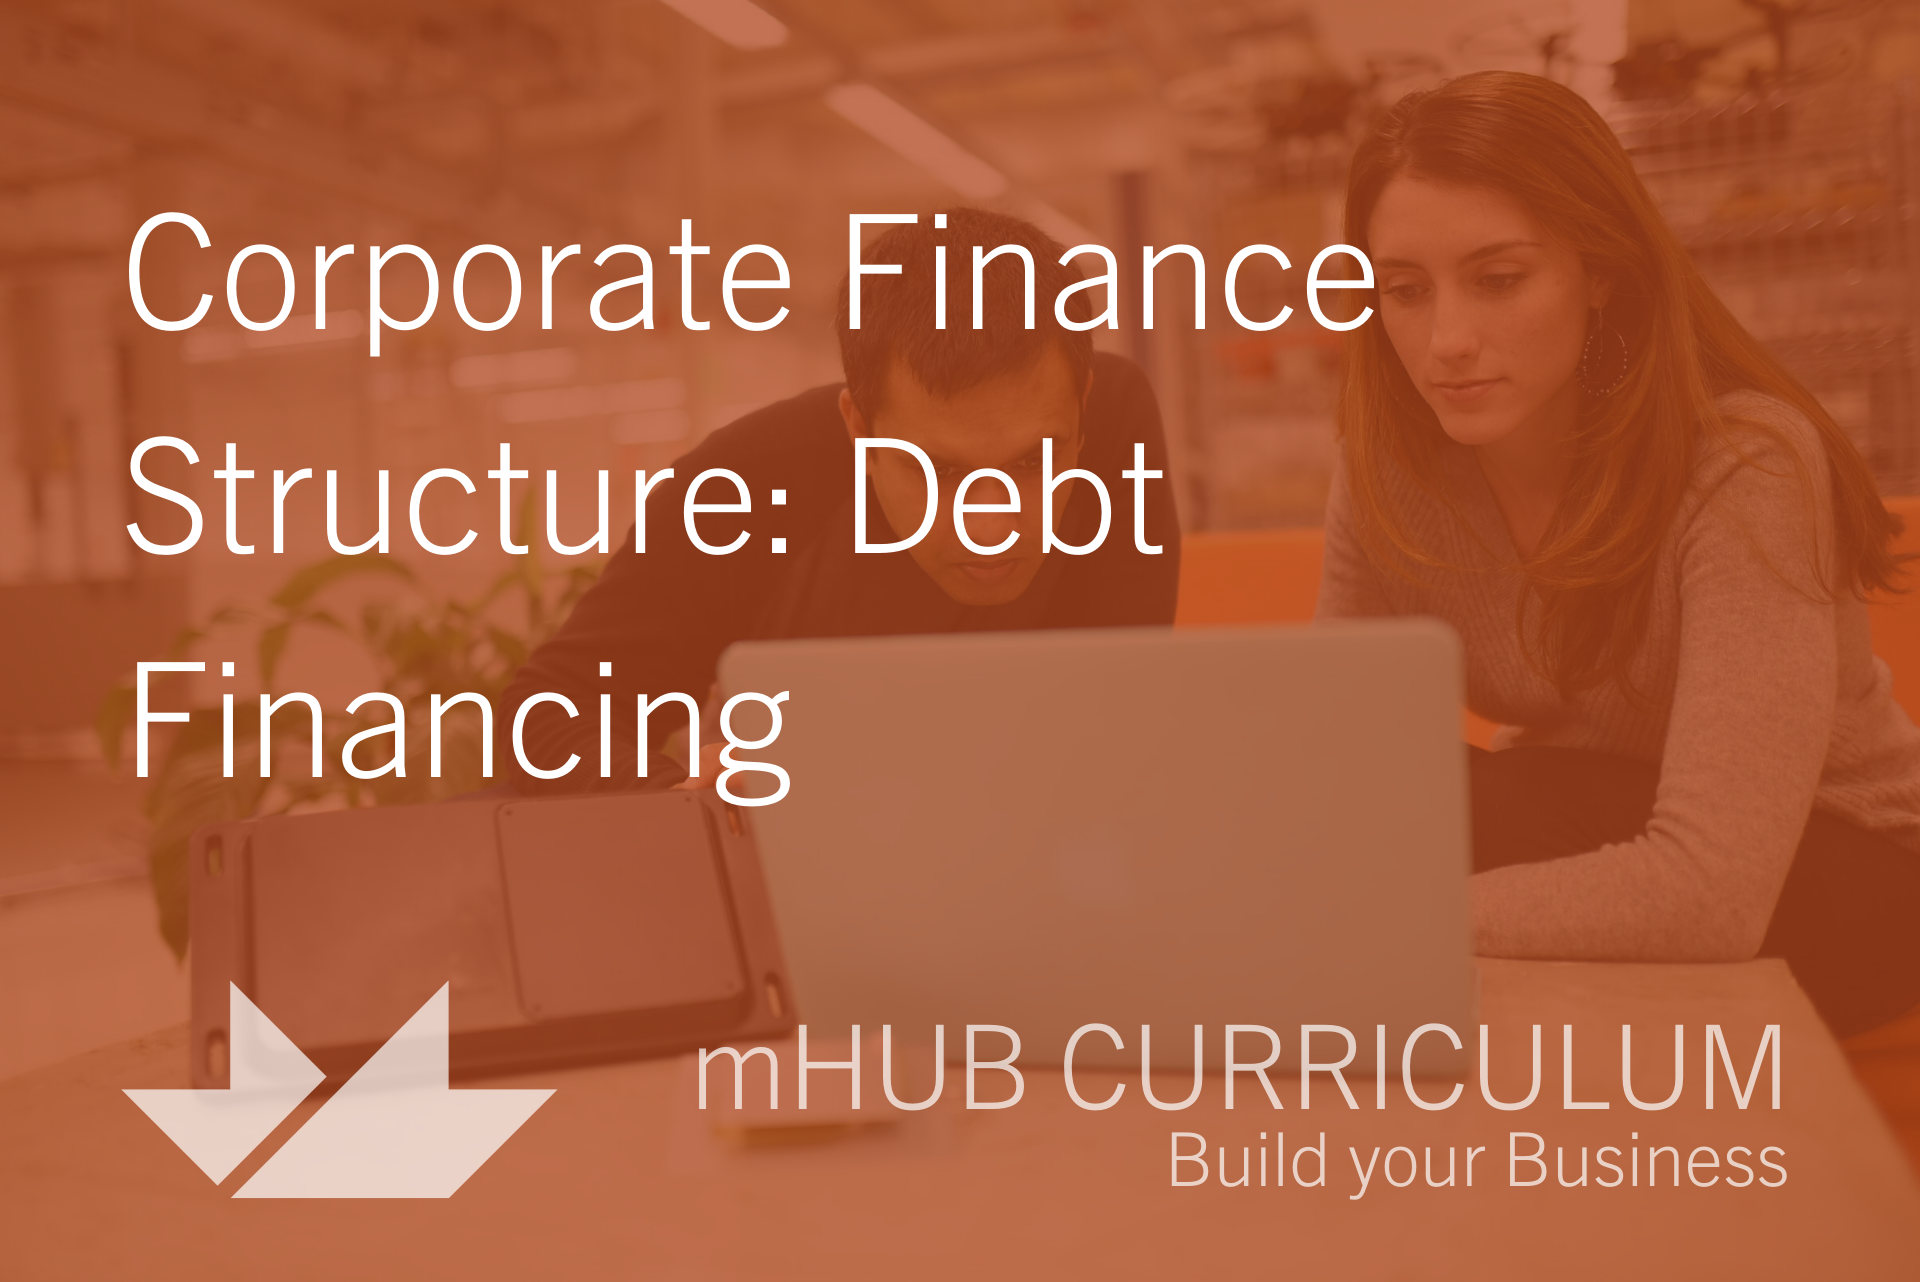 Corporate Finance Structure: Debt Financing